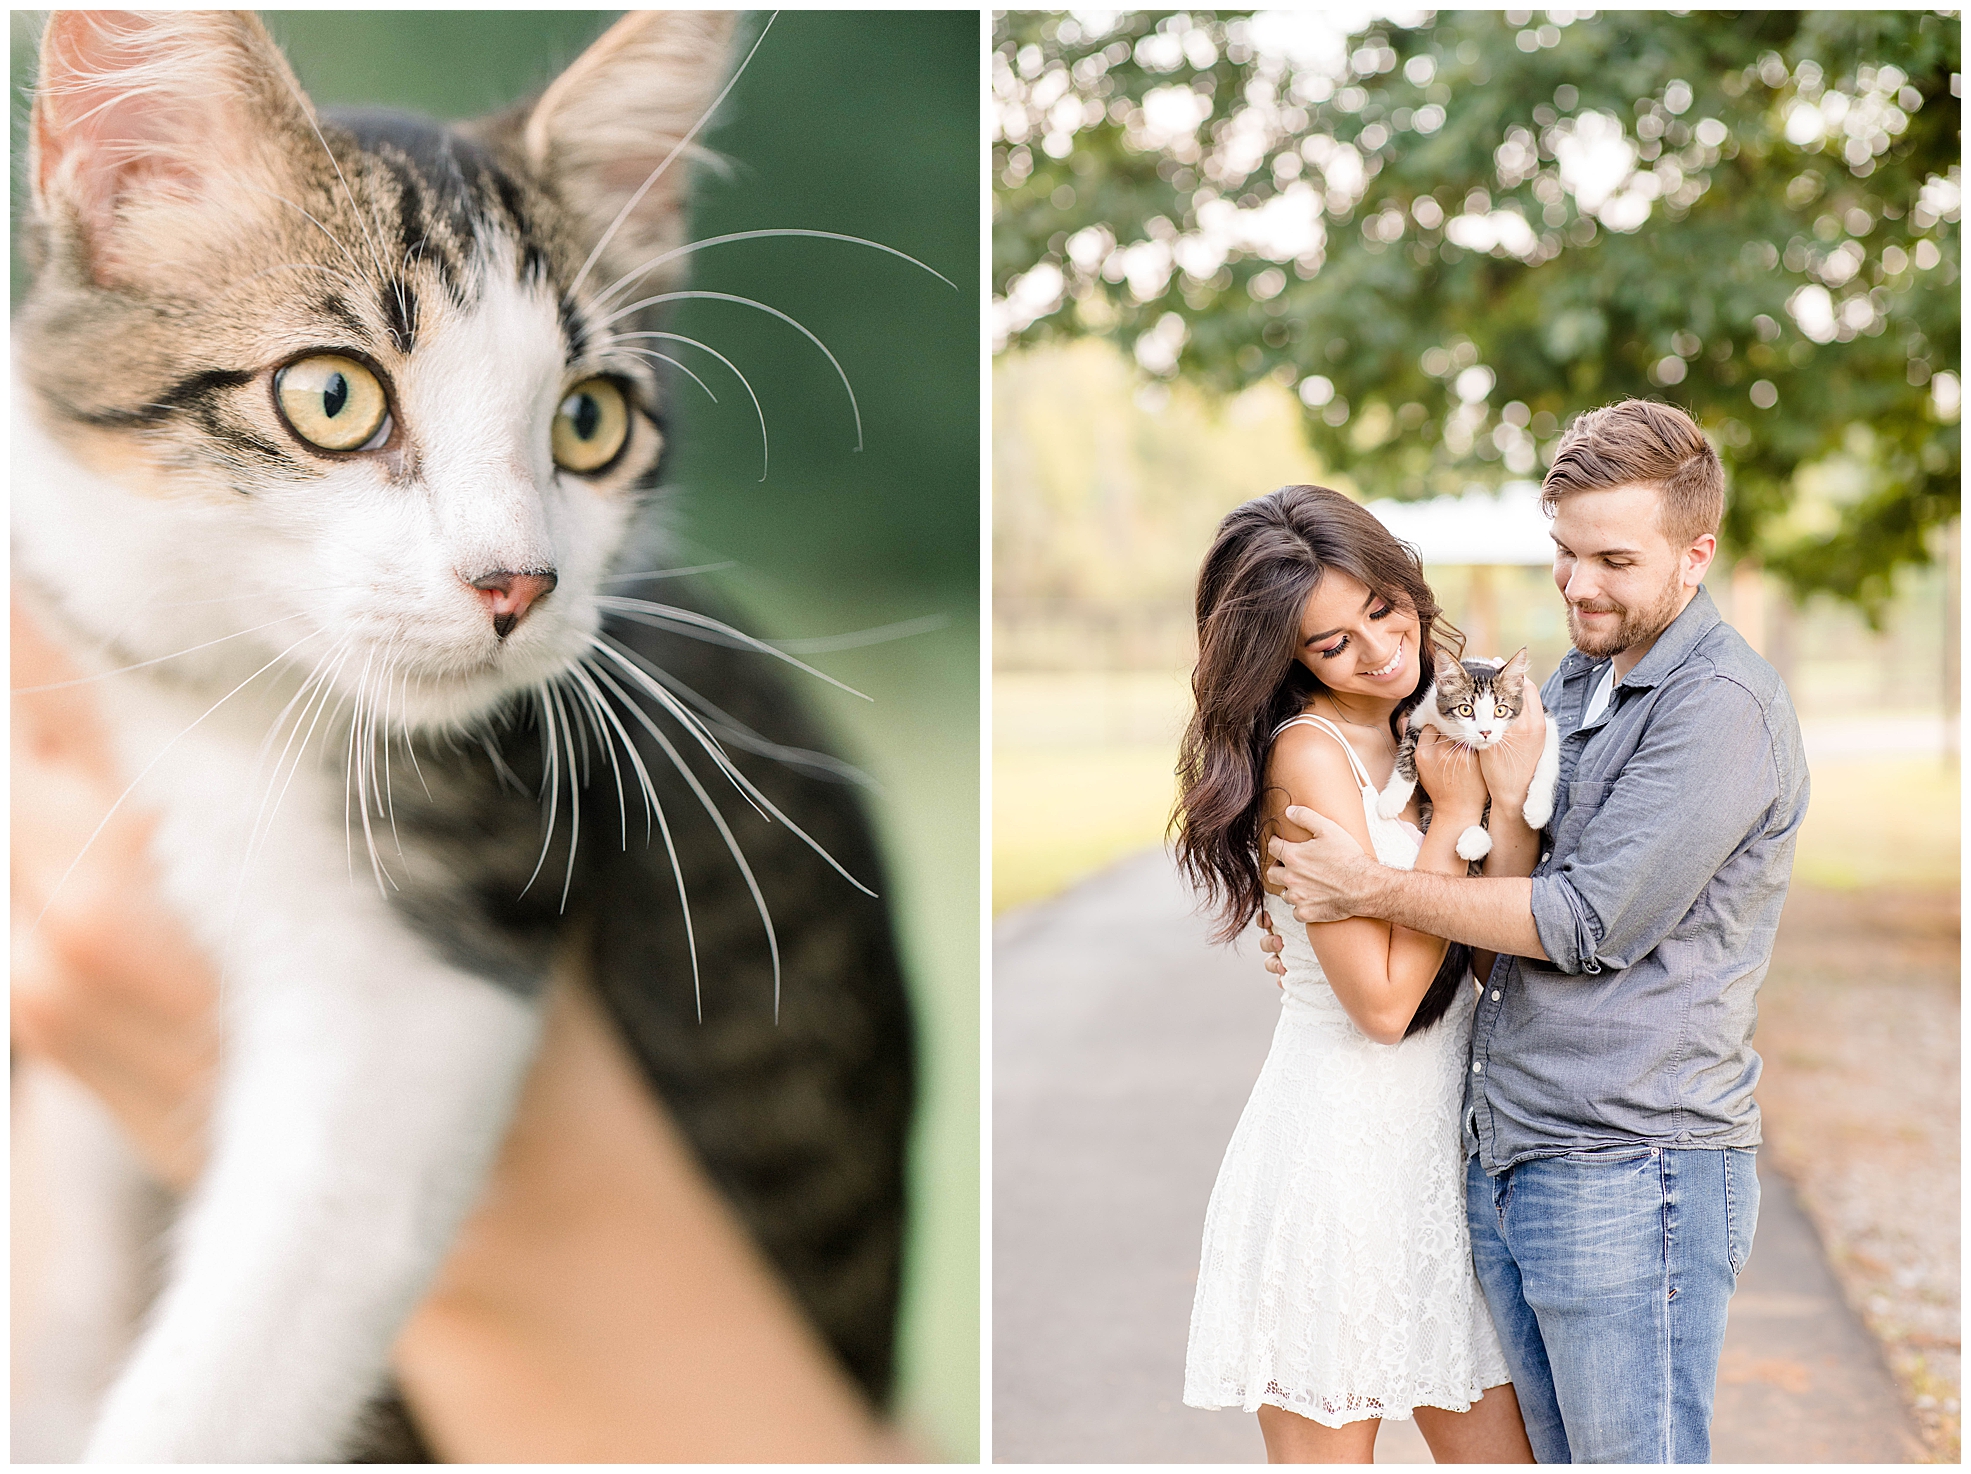 Birmingham, Alabama Wedding Photographers - Katie & Alec | Megan & Michael's Anniversary Session with Kitten